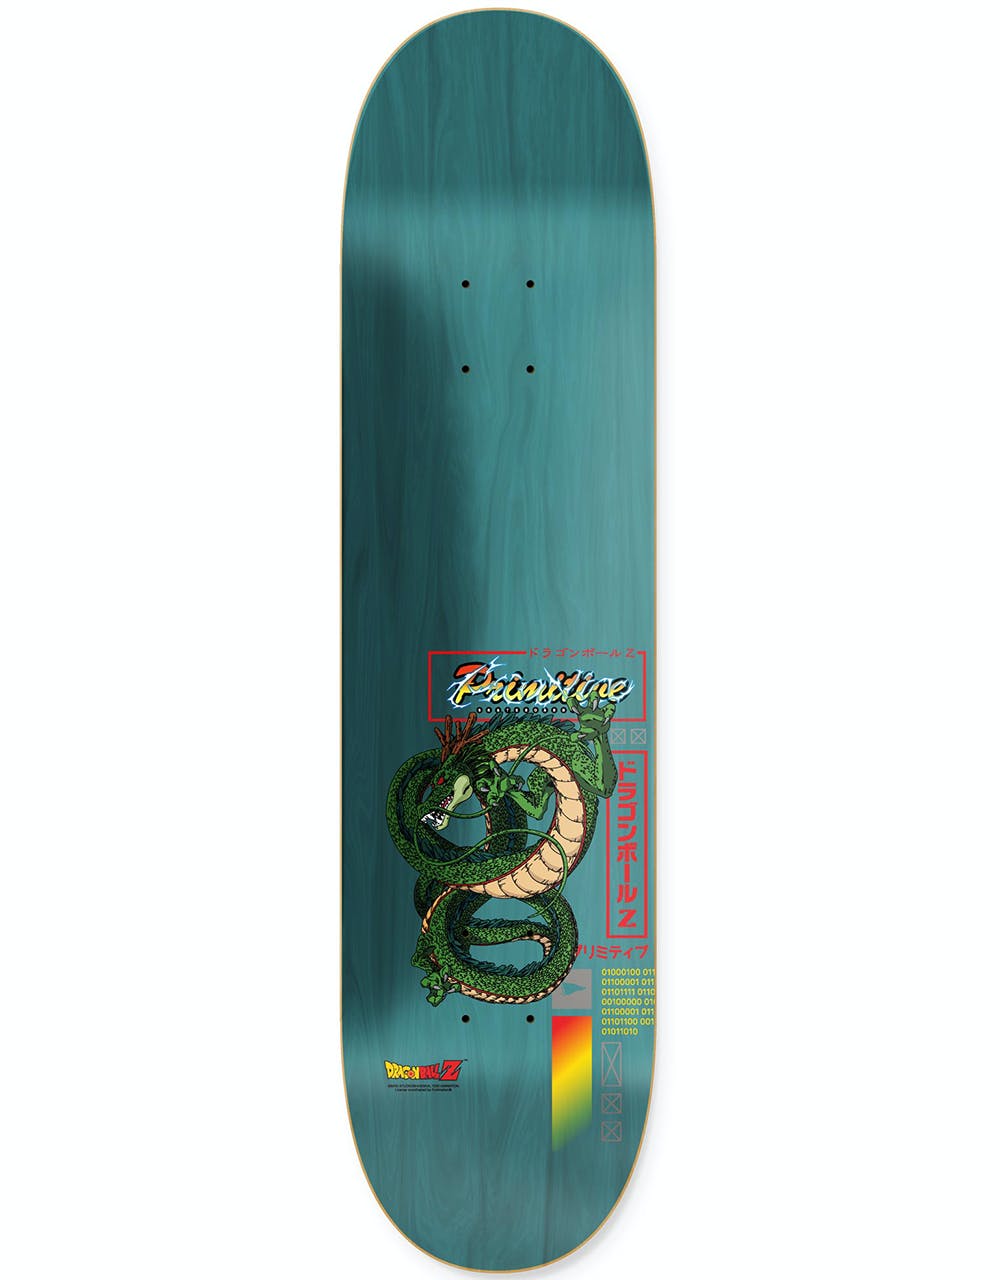 Primitive x Dragon Ball Z Krillin Team Skateboard Deck - 8.125"